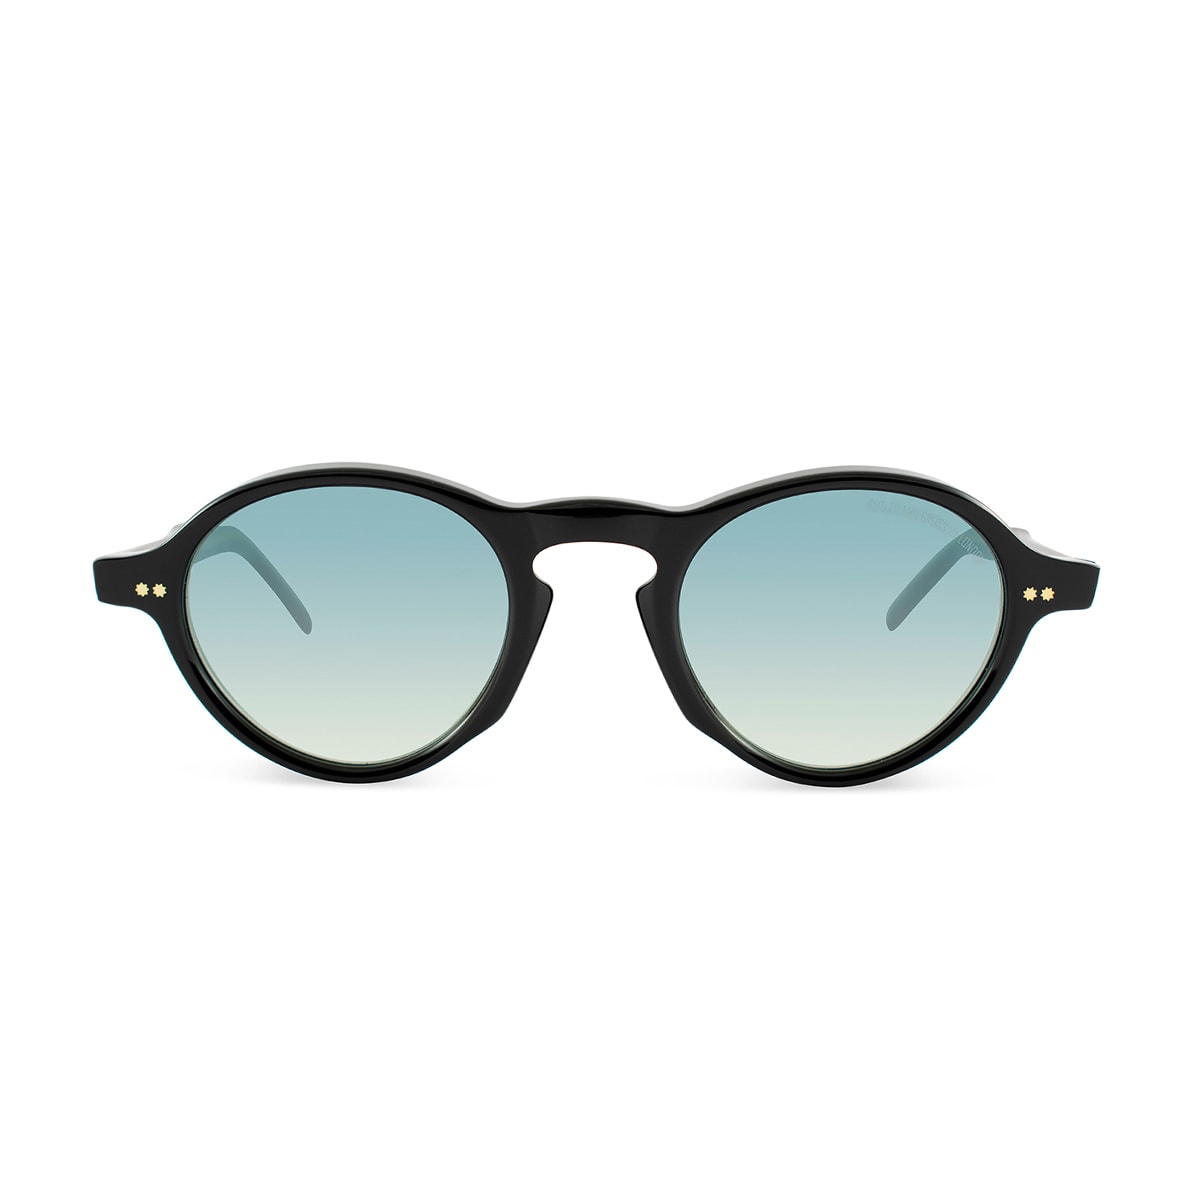 Gr08 01 Black Sunglasses